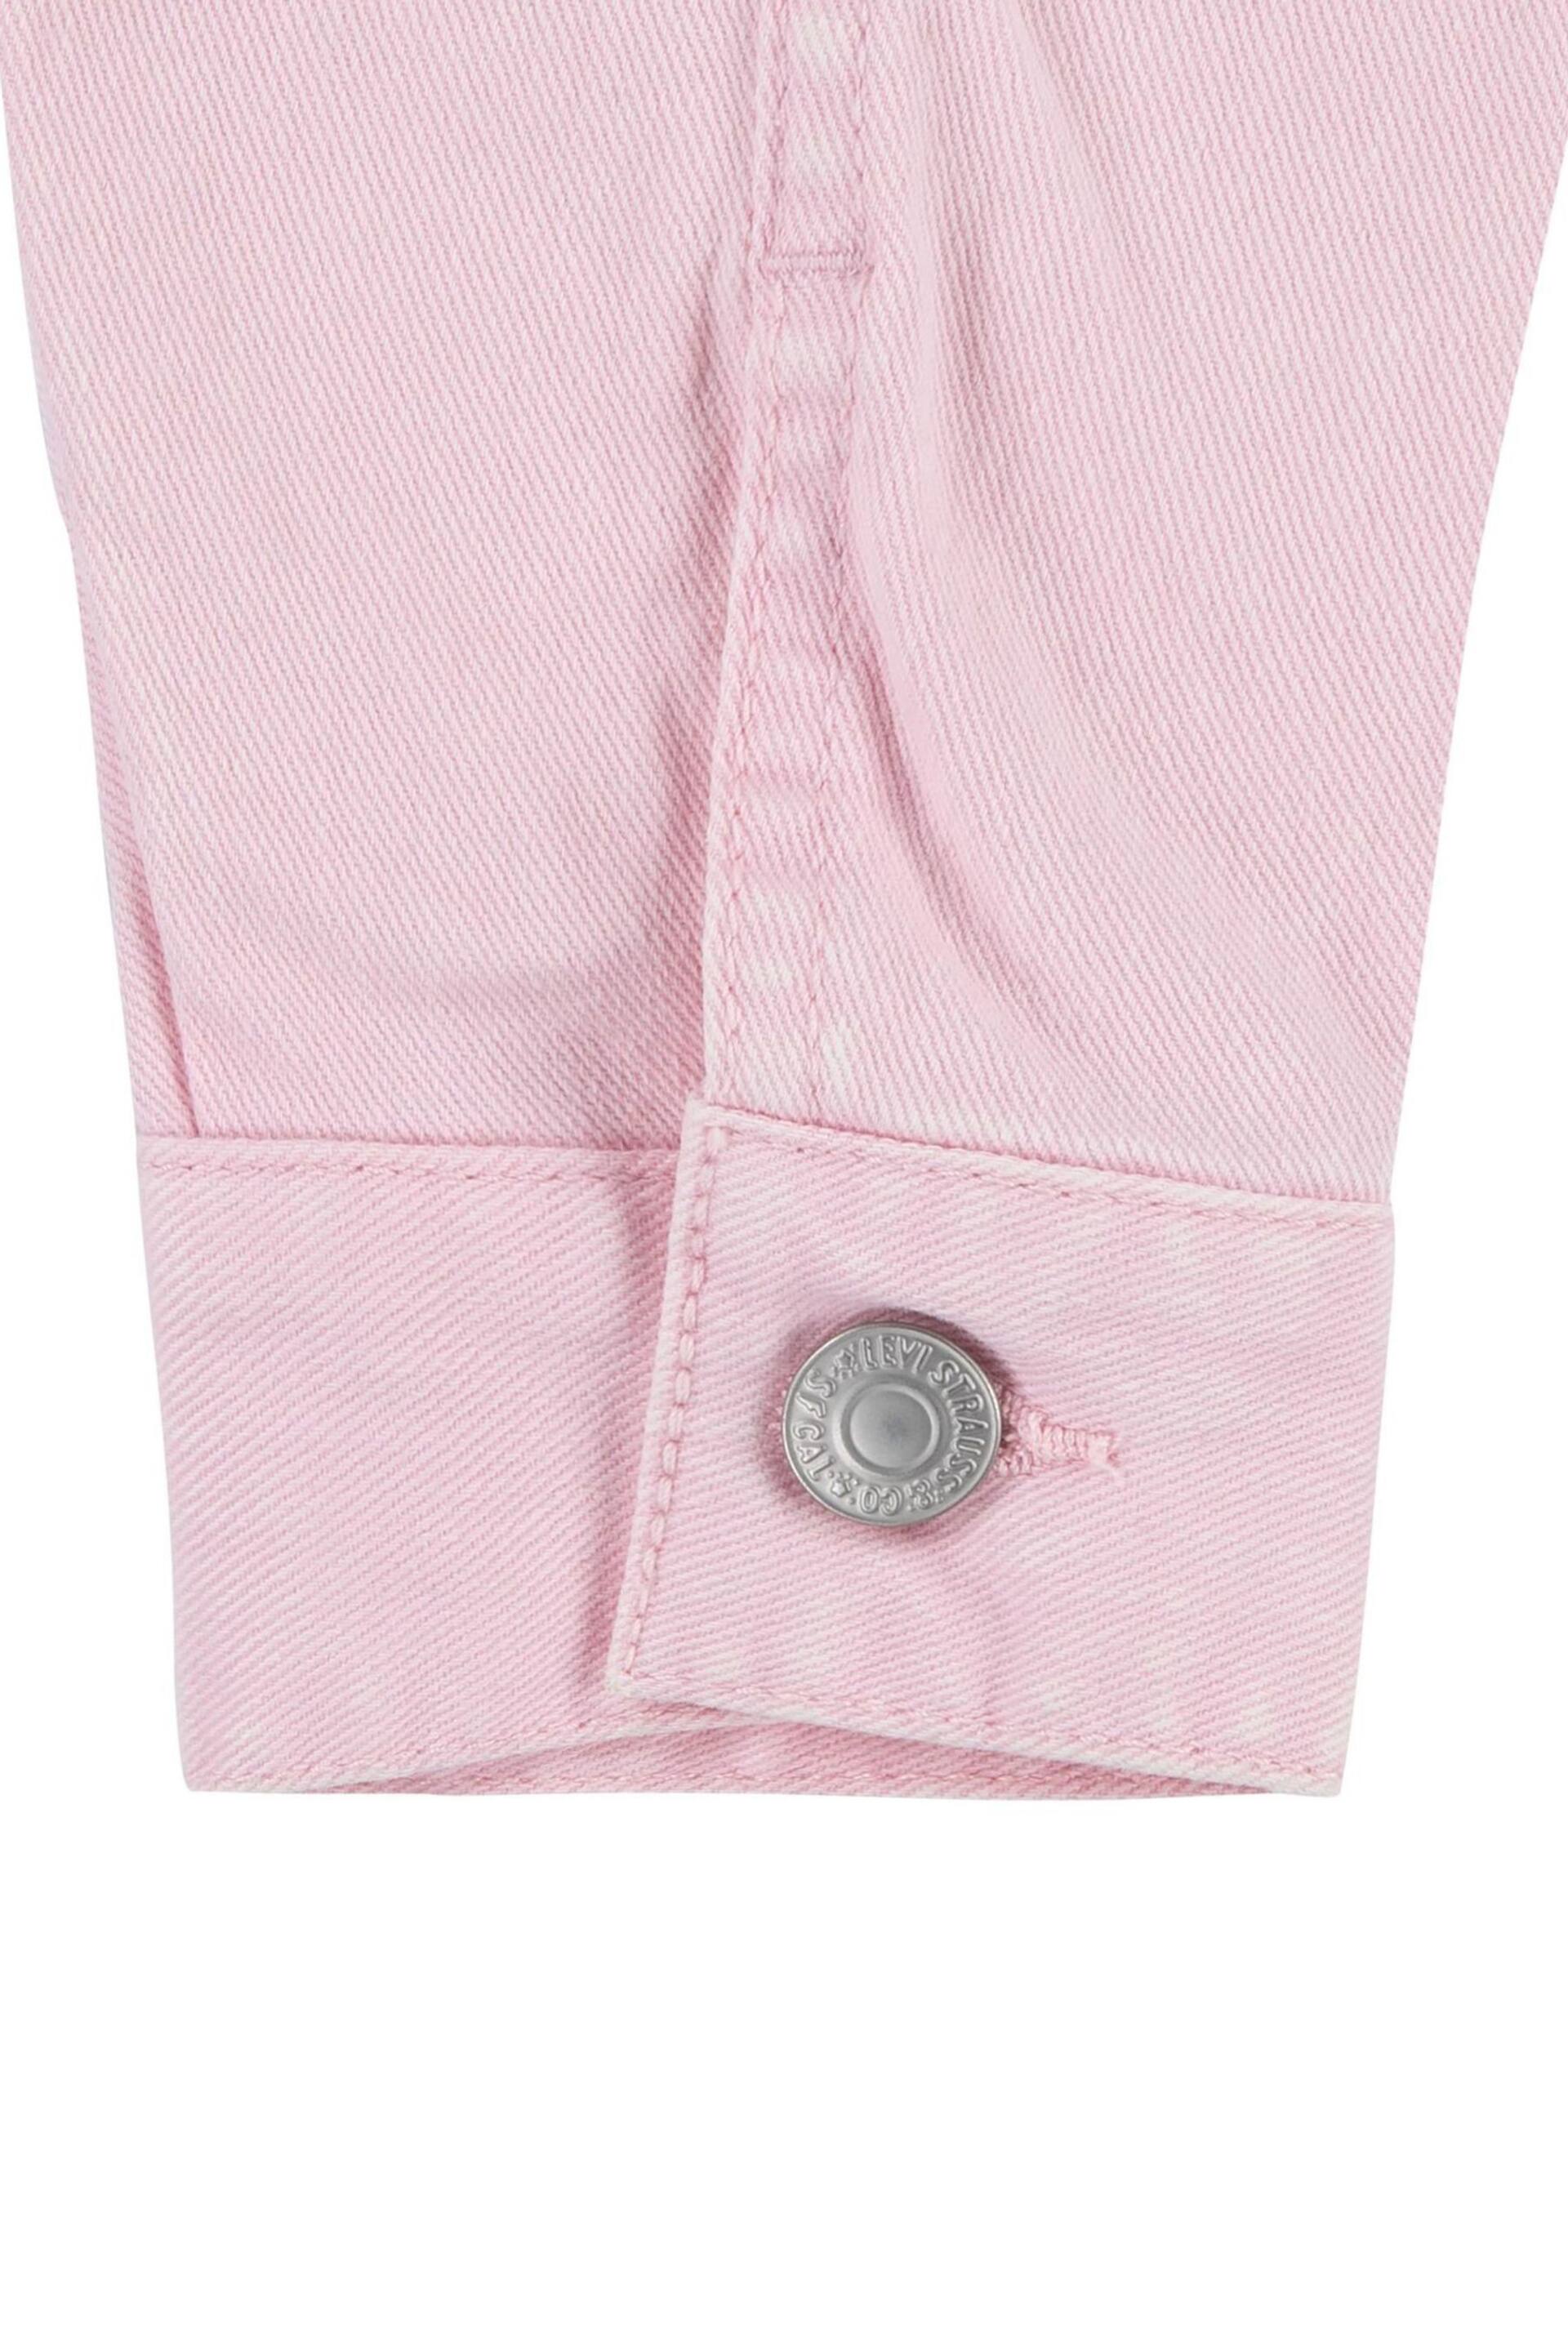 Levi's® Pink Cropped Denim Trucker Jacket - Image 4 of 4